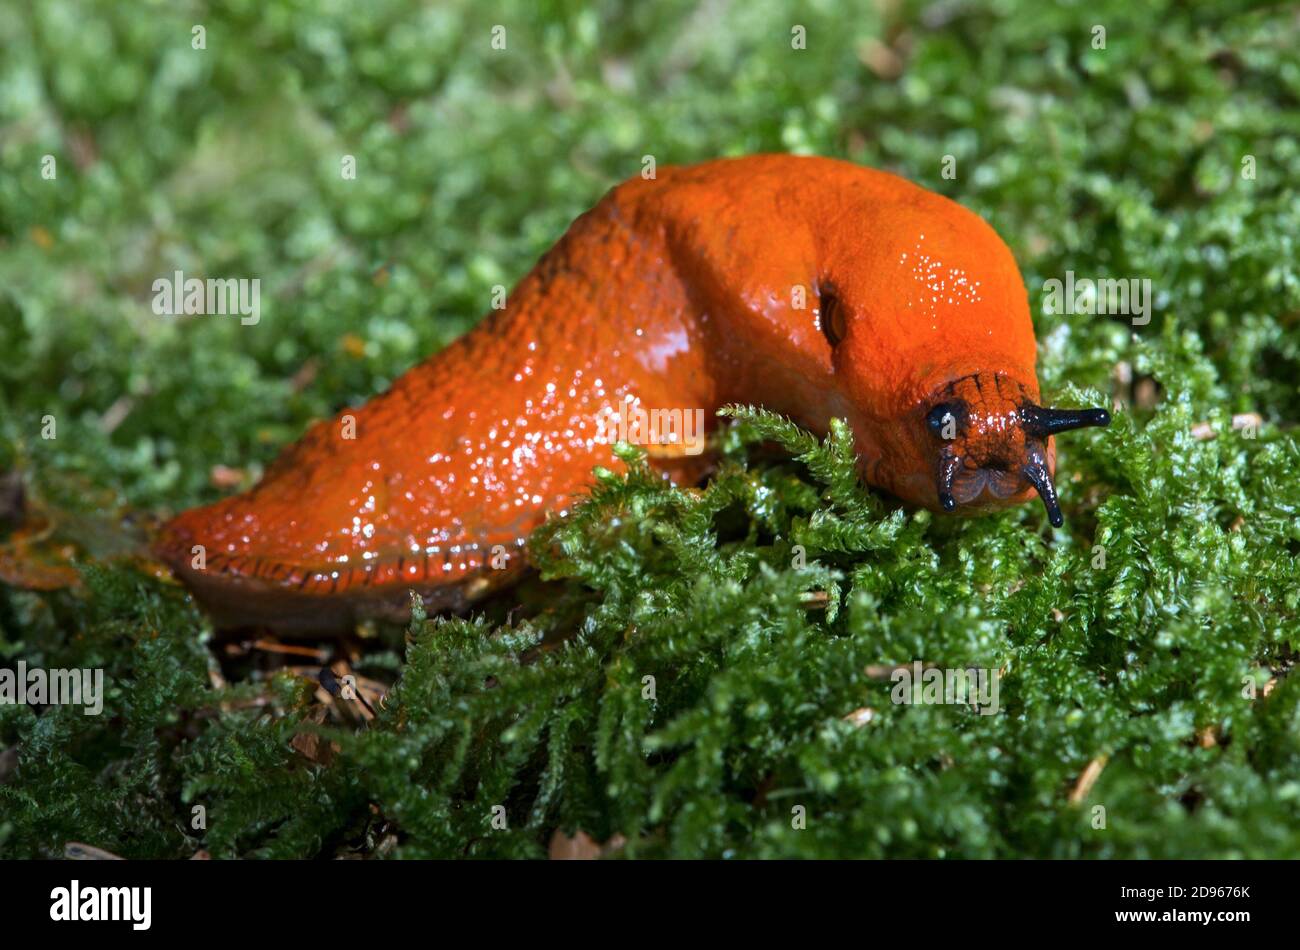 Red slug (Arion rufus), Roundback slug family (Arionidae), Chaneaz, Switzerland. Stock Photo